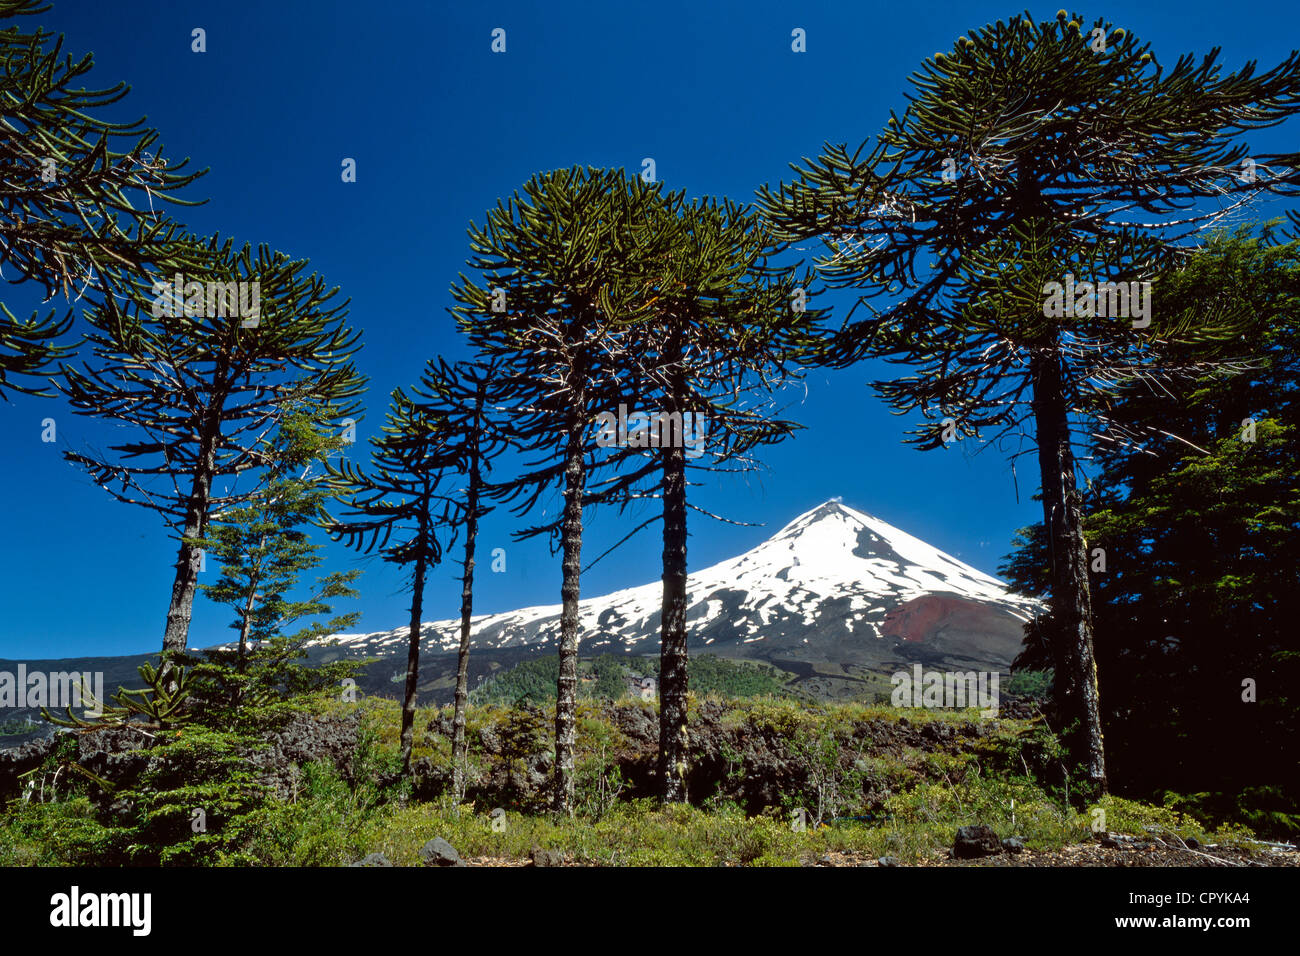 Chile, Araucania Region, national park del Conguillo, Llaima volcano which is still active and Araucaria trees Stock Photo